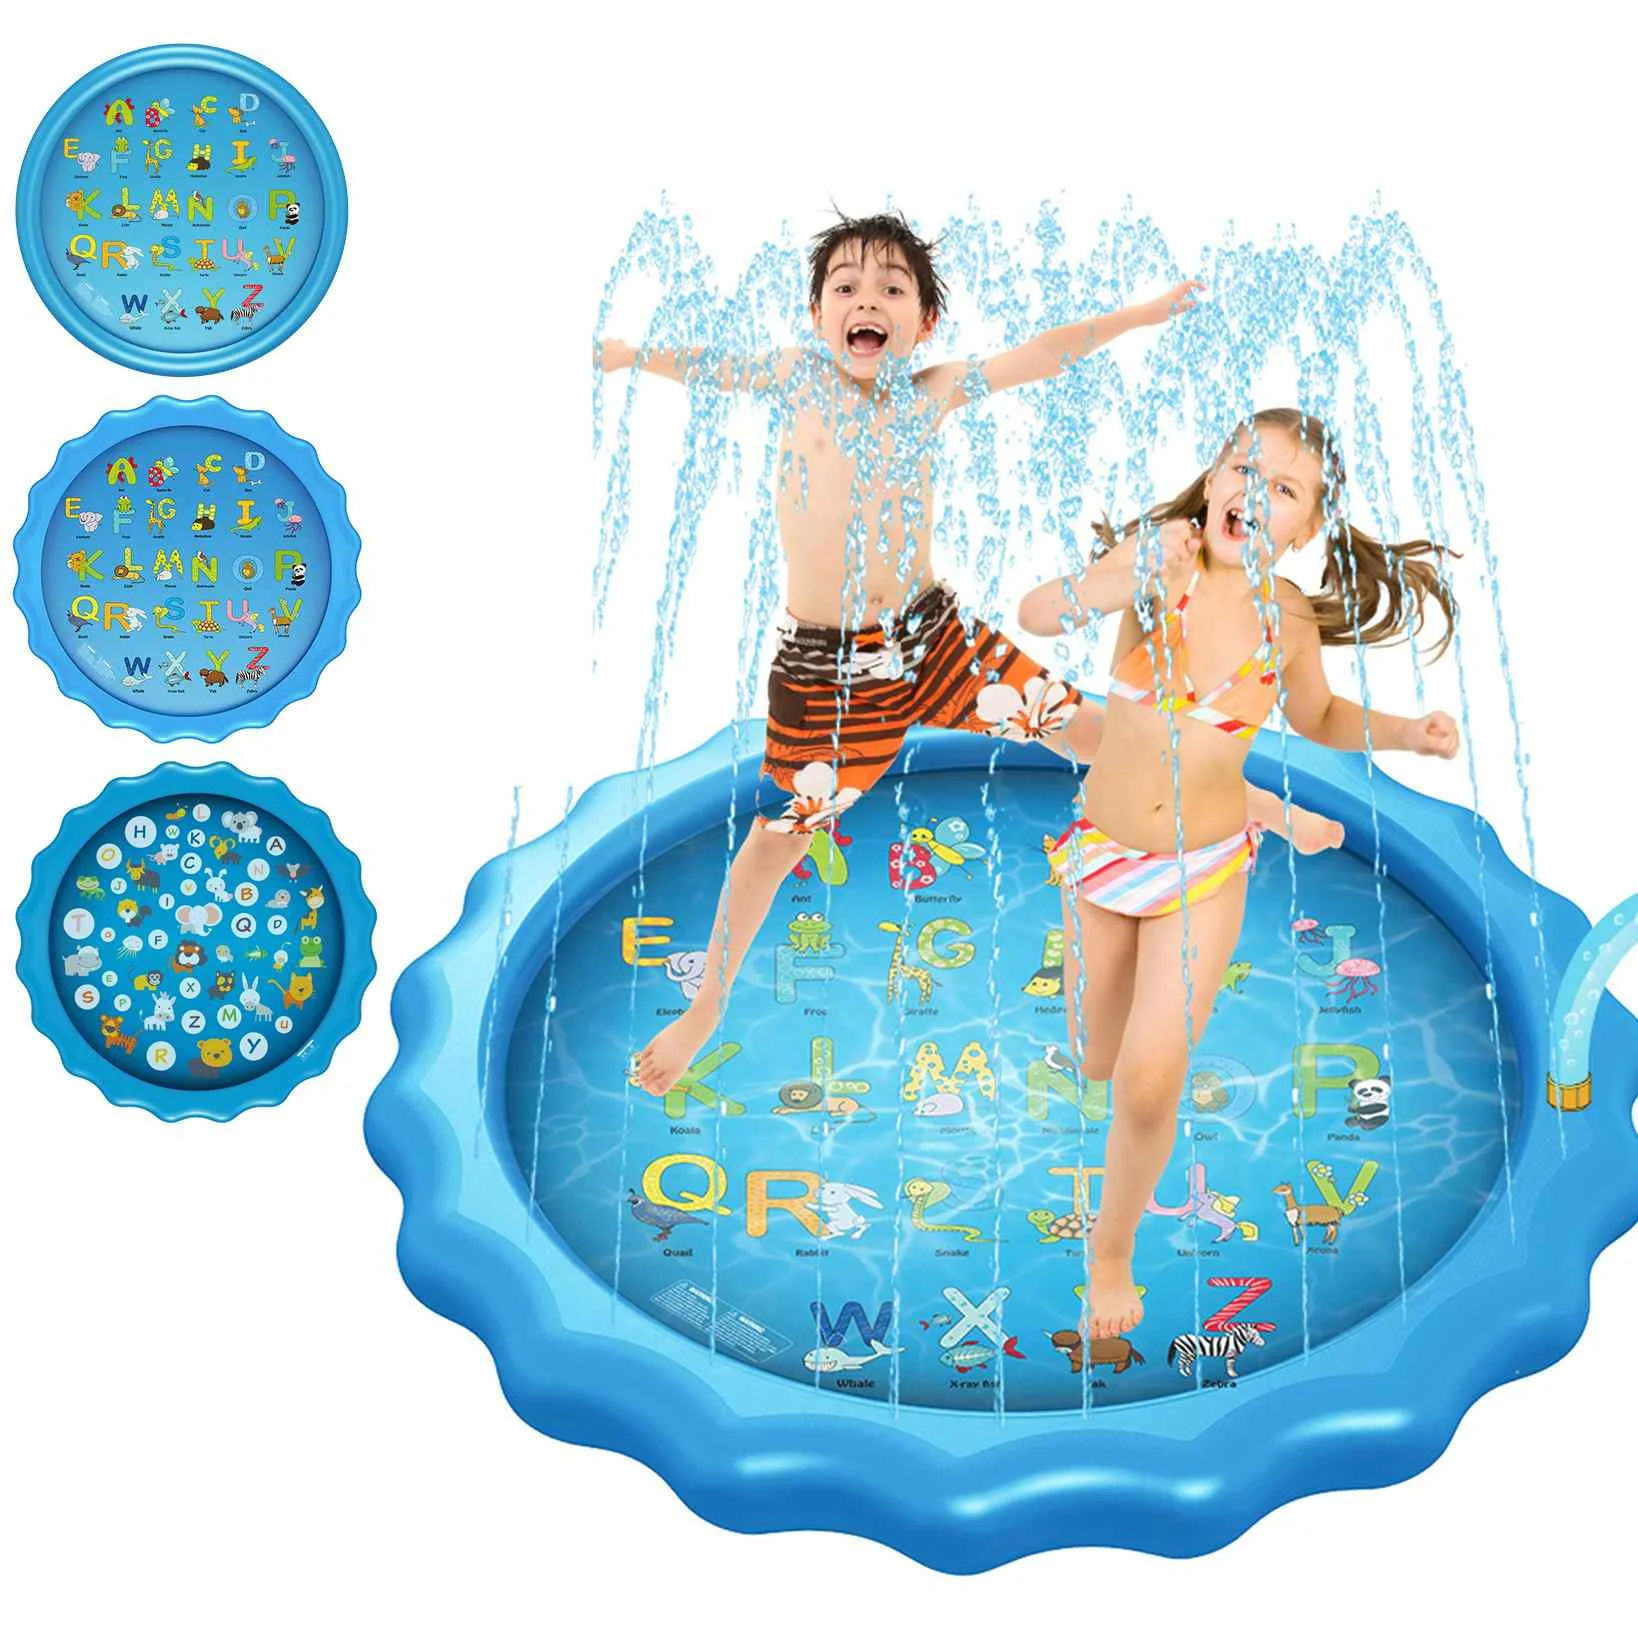 

170CM Inflatable Swimming Pool Summer Splash Sprinkler Sprinkler Play Mat Outdoor Water Play Mat Toy for Kids Children Toddlers